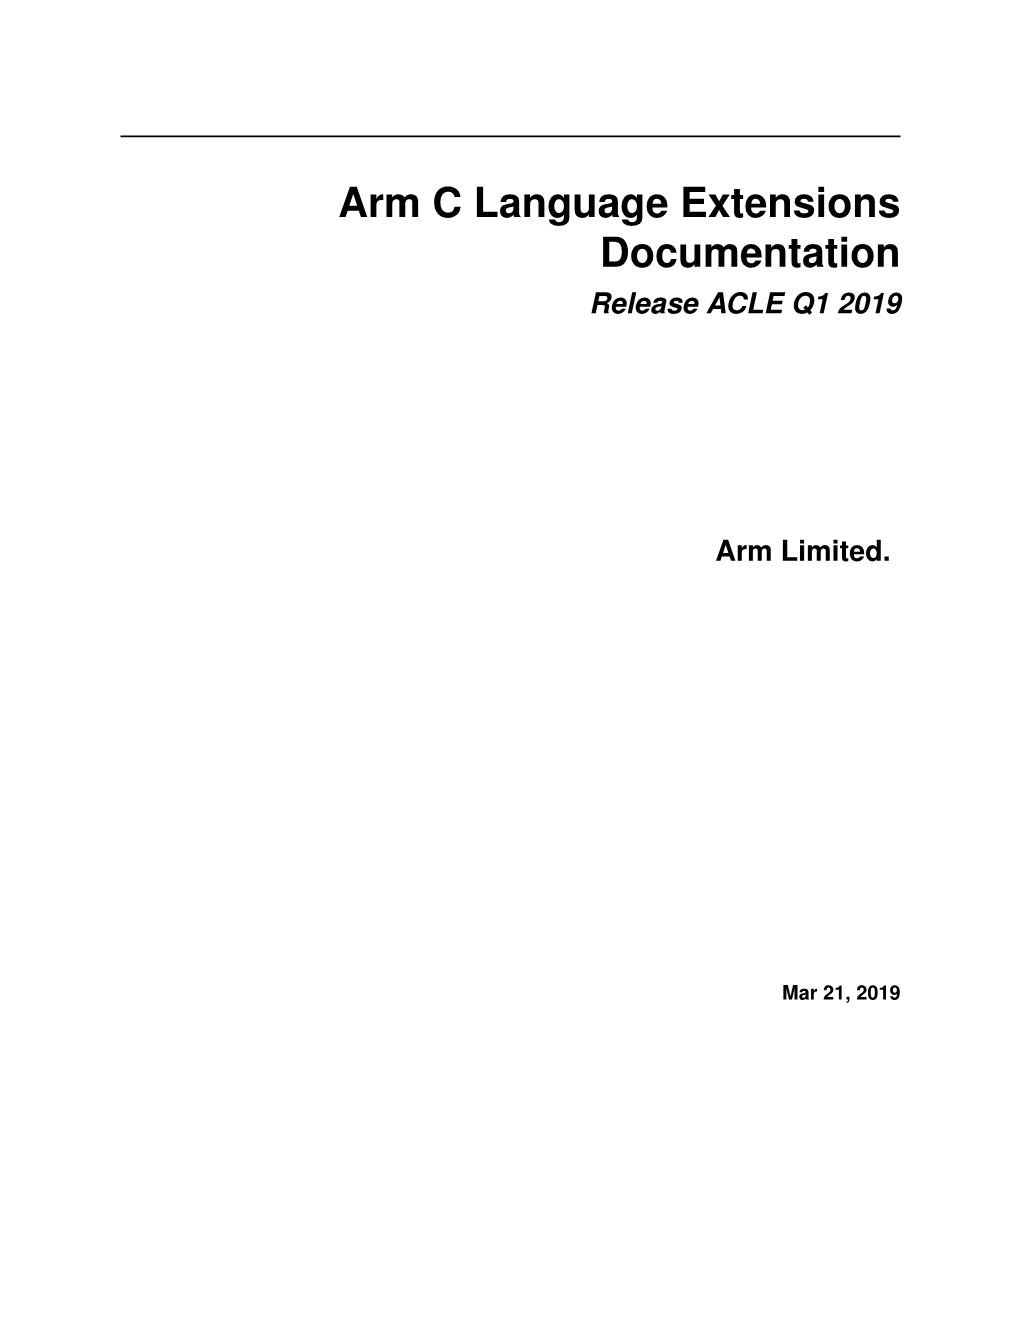 Arm C Language Extensions Documentation Release ACLE Q1 2019